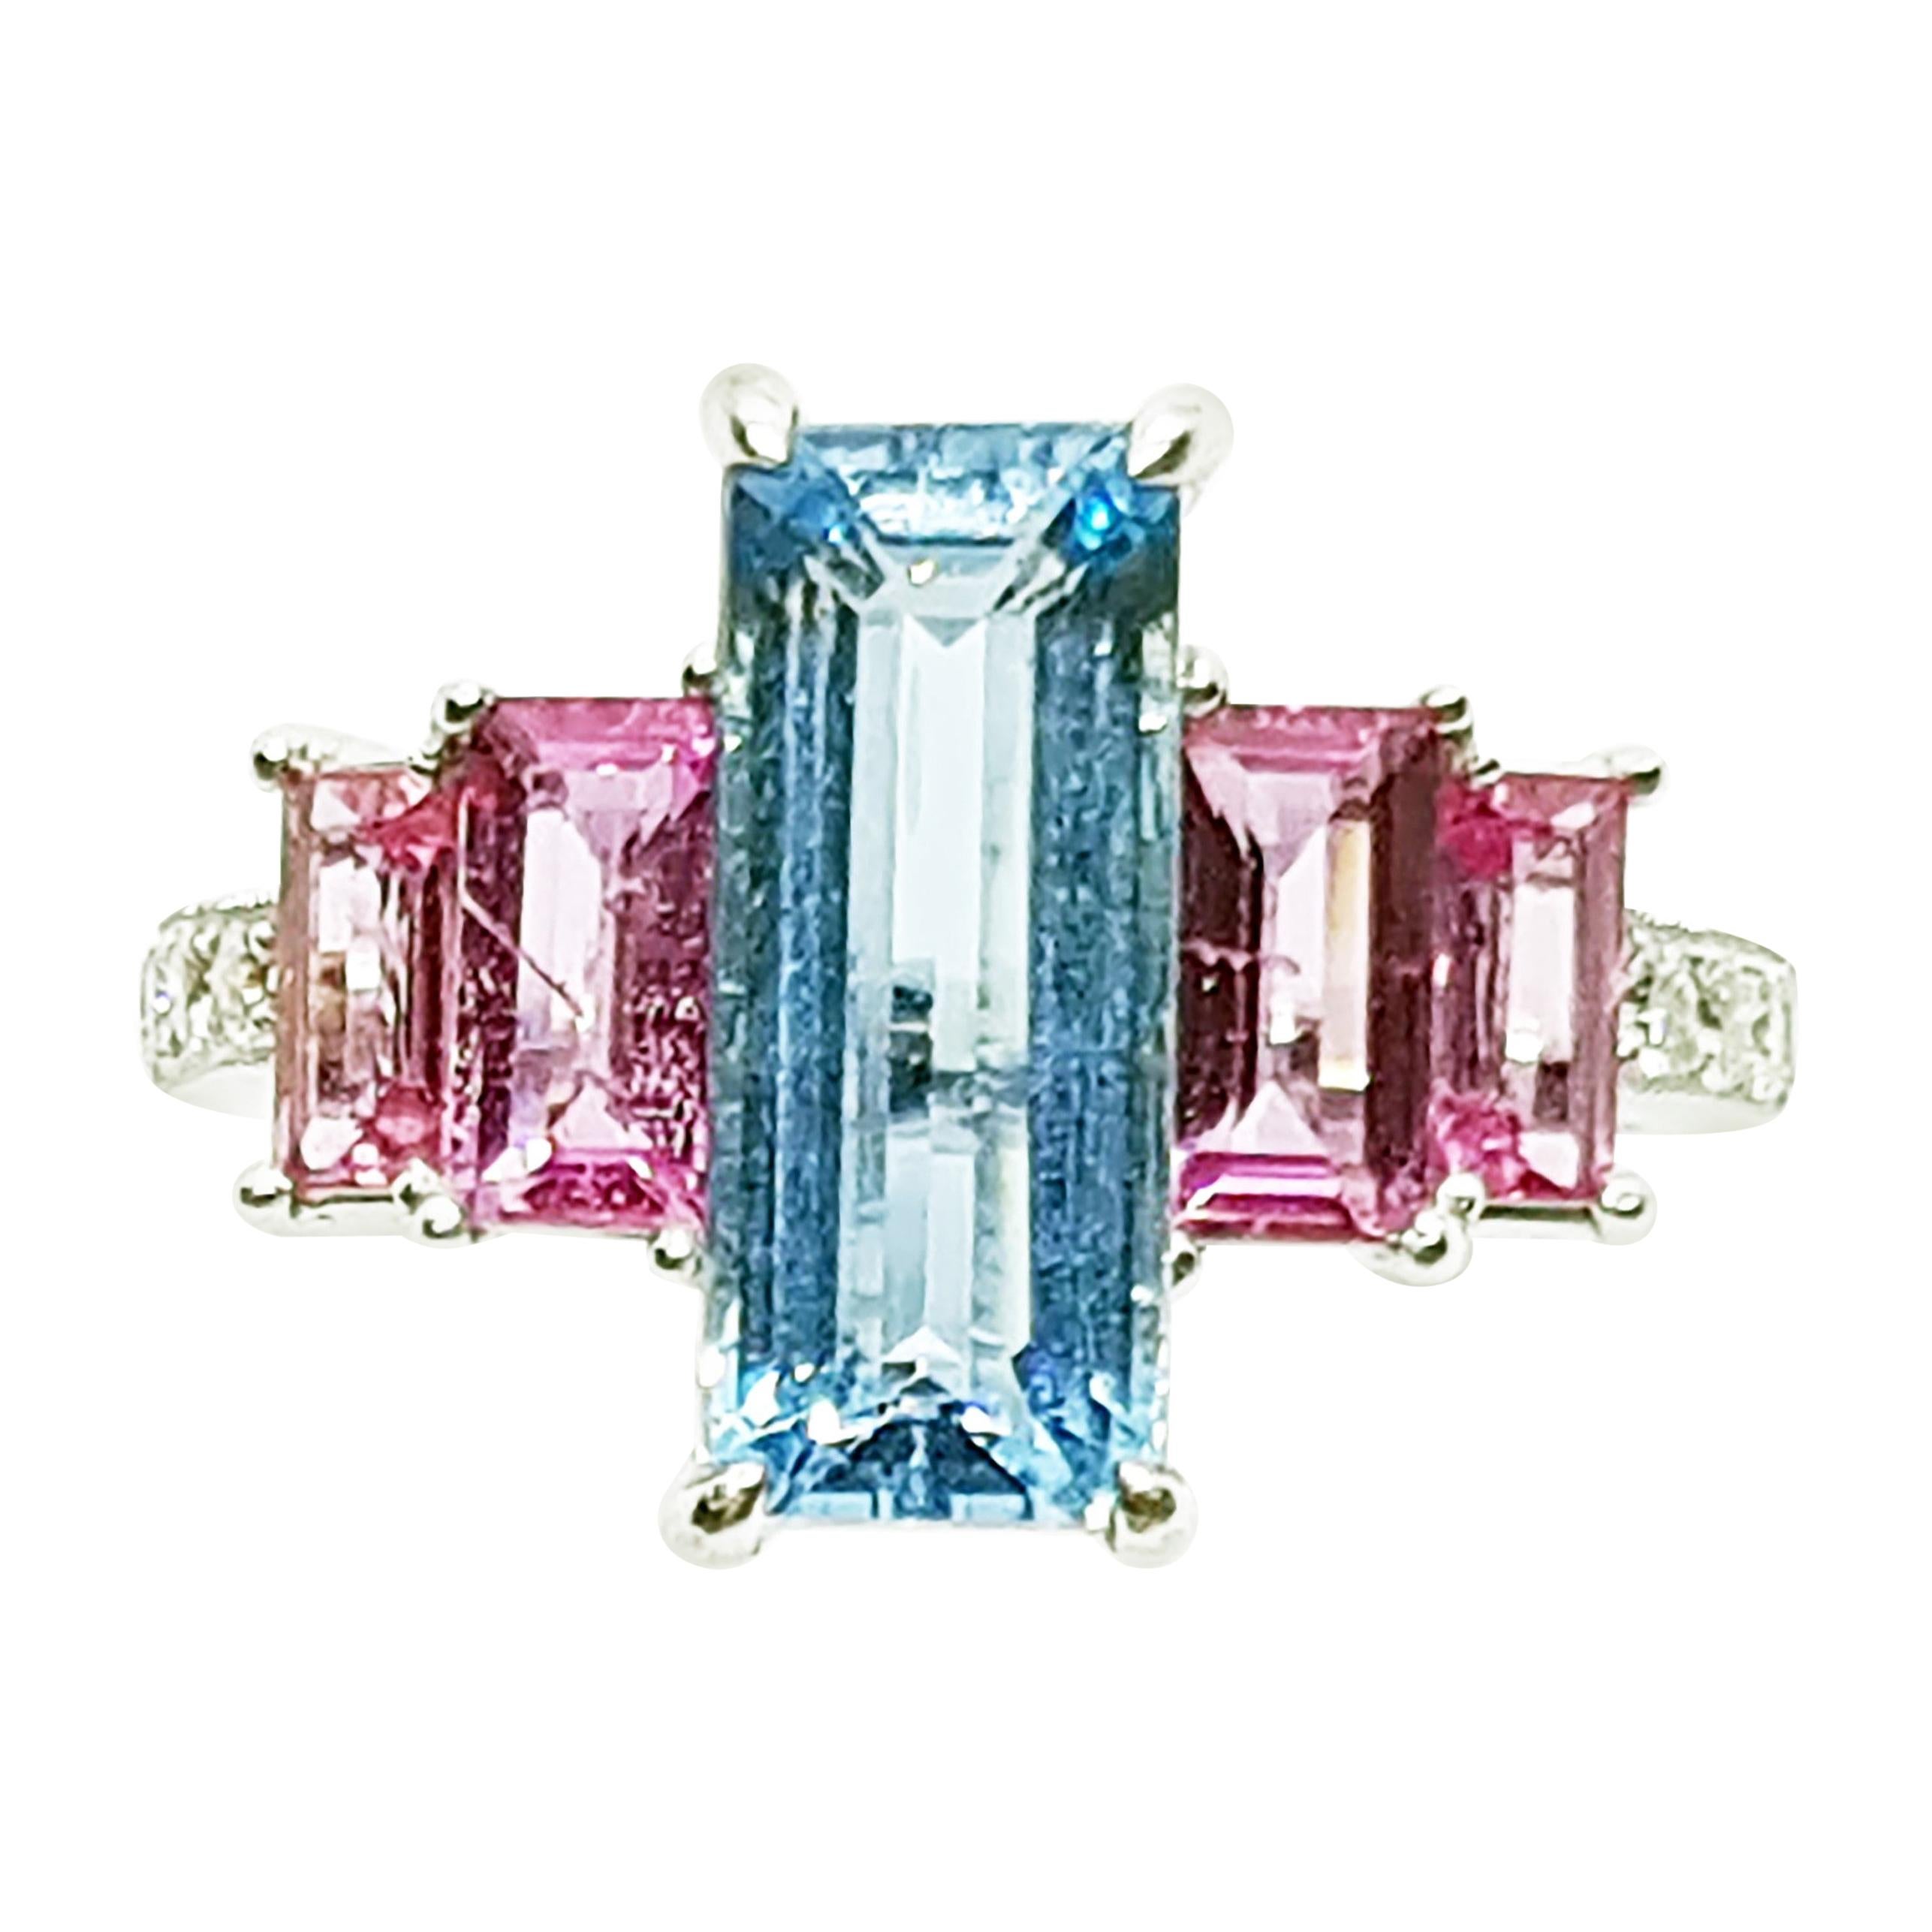 Aquamarine and Pink Sapphire with Diamond Ring Set in 18 Karat White Gold